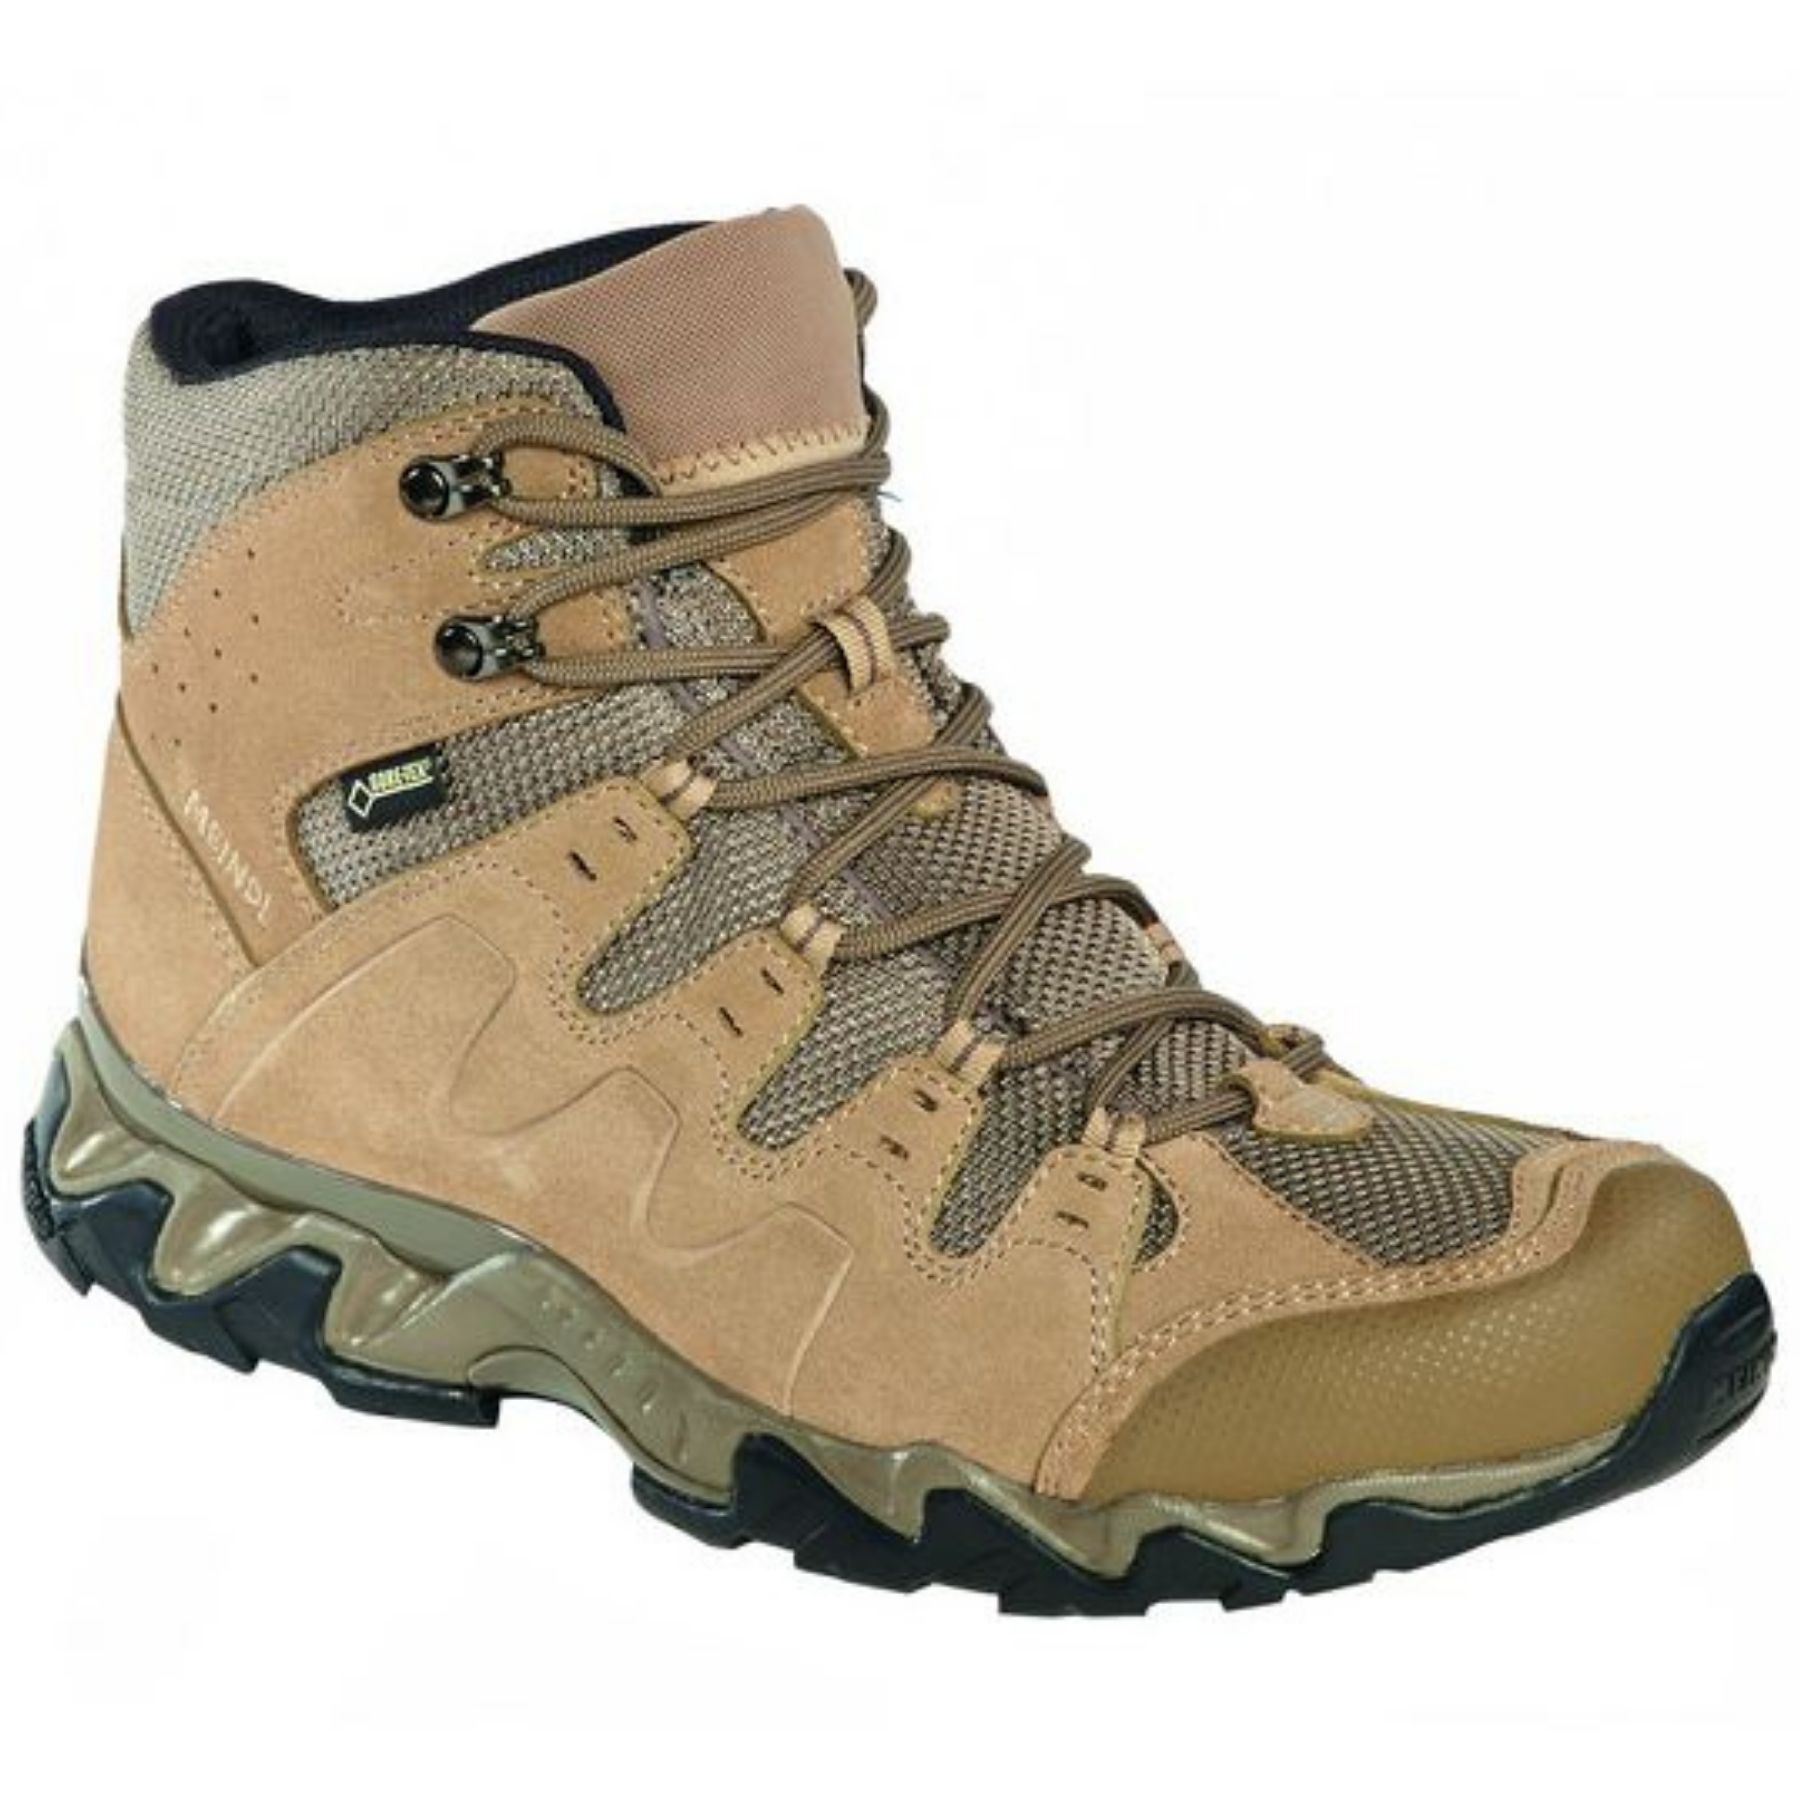 Meindl Provider GTX - Walking Boots